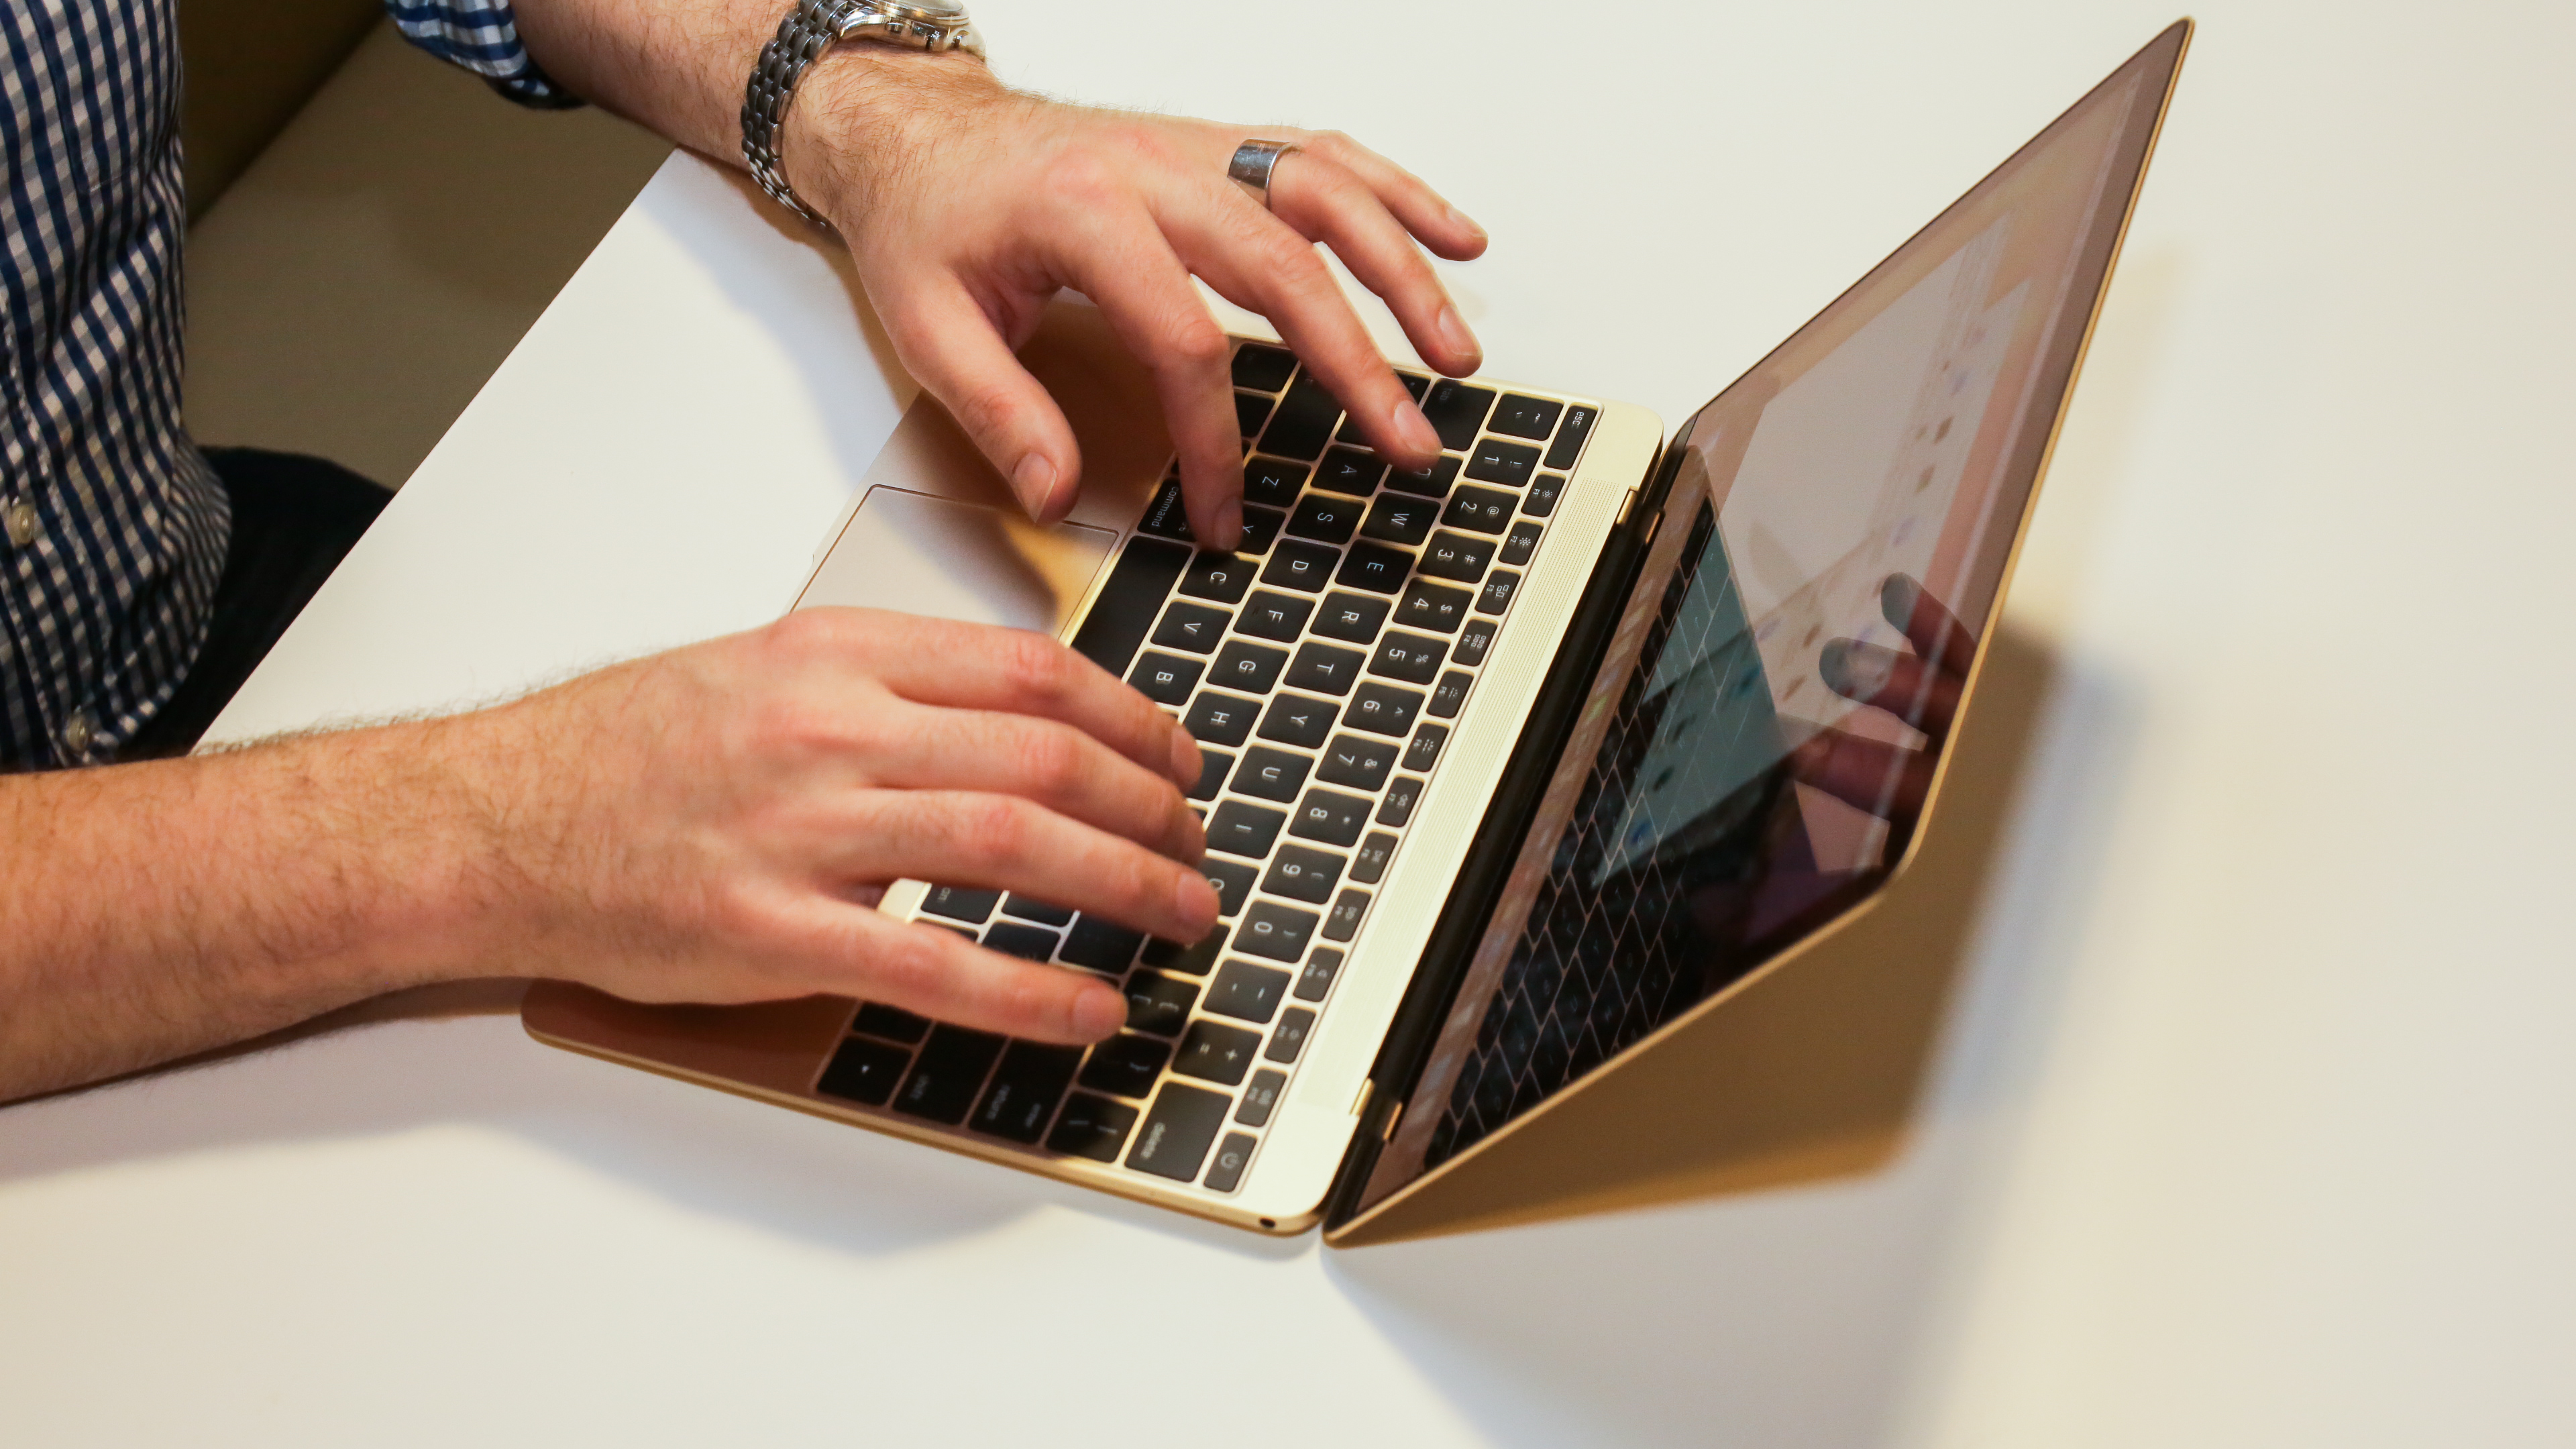 Apple MacBook (12-inch, 2015) review: A minimalist MacBook that